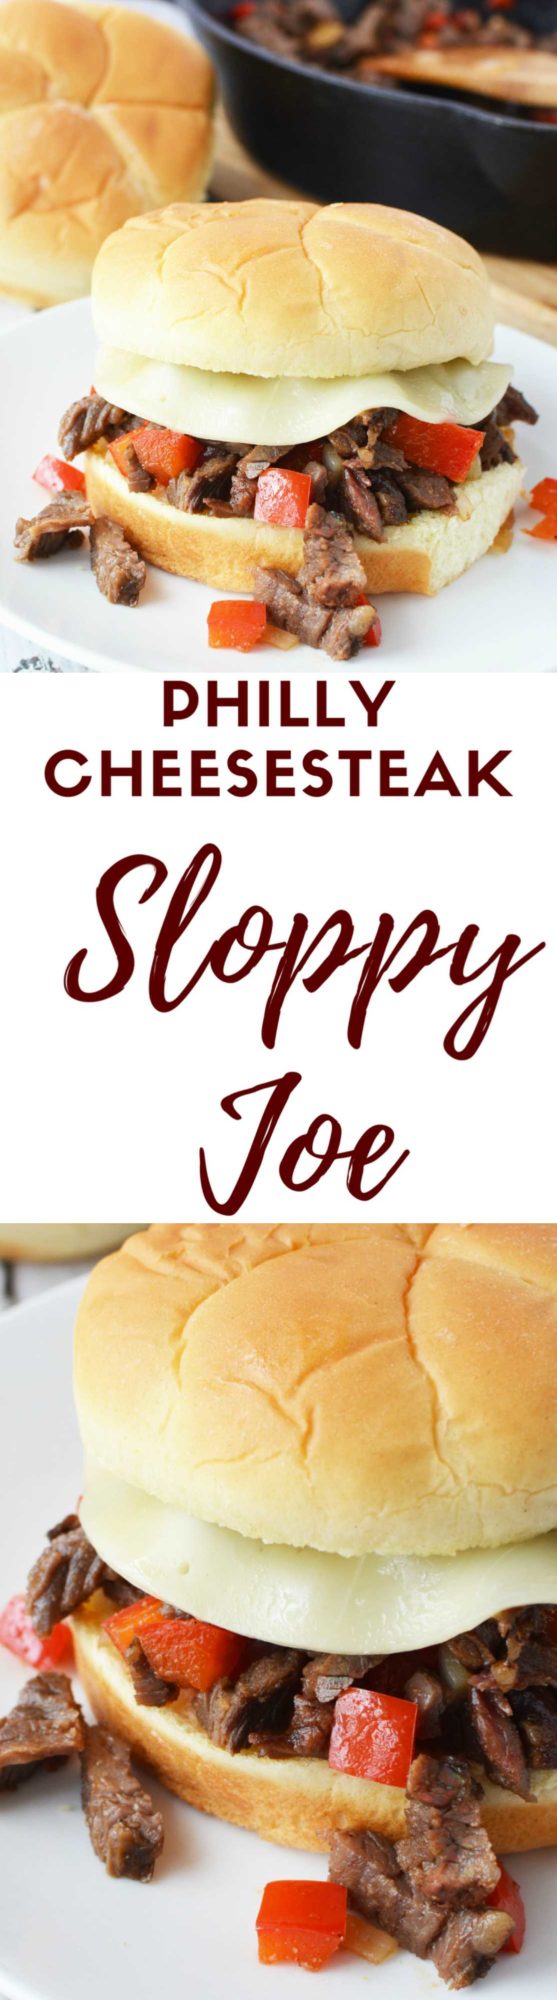 Philly cheesesteak sloppy joe